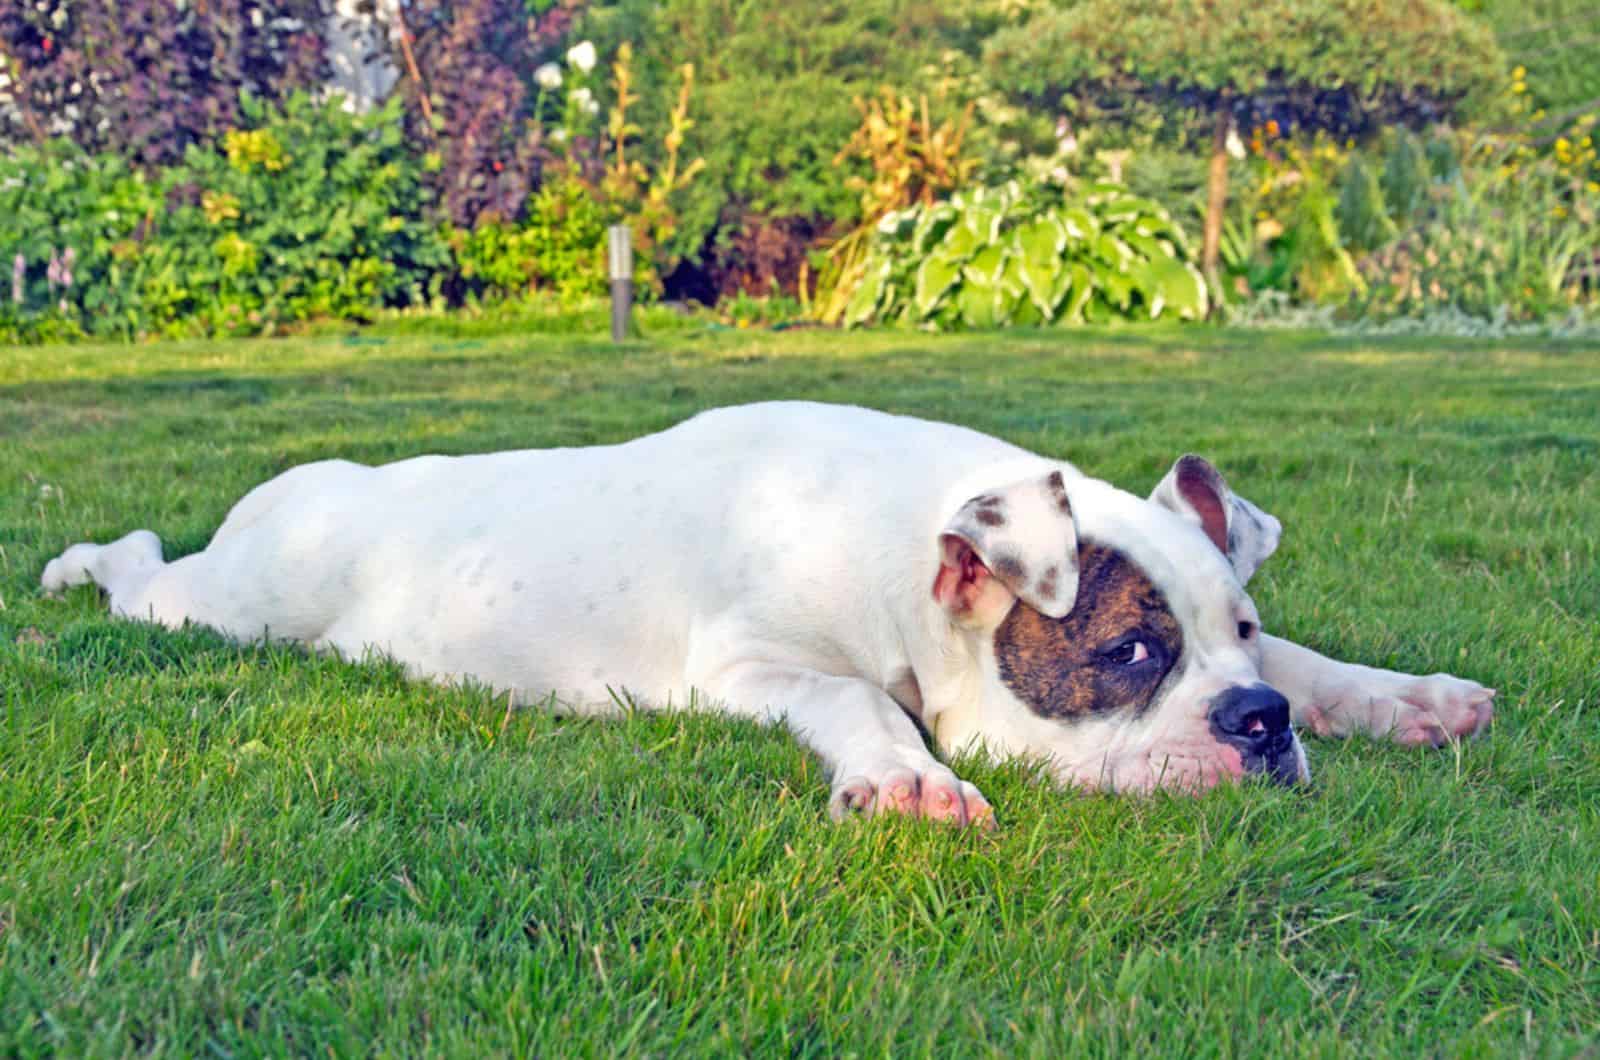 american bulldog lying on the grass in the yard